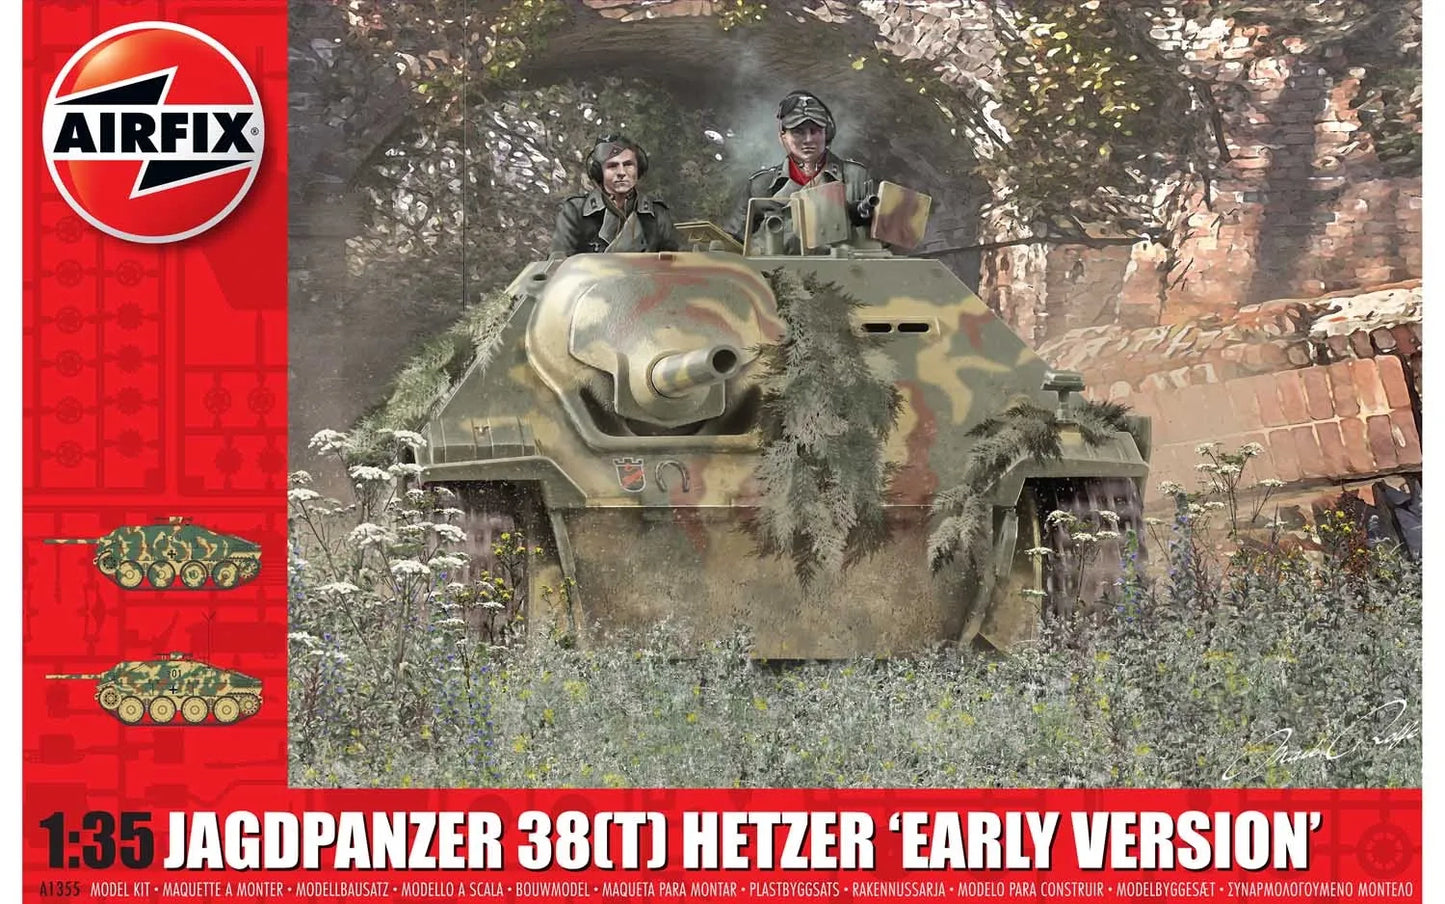 Airfix JagdPanzer 38 tonne Hetzer Early Version 1:35